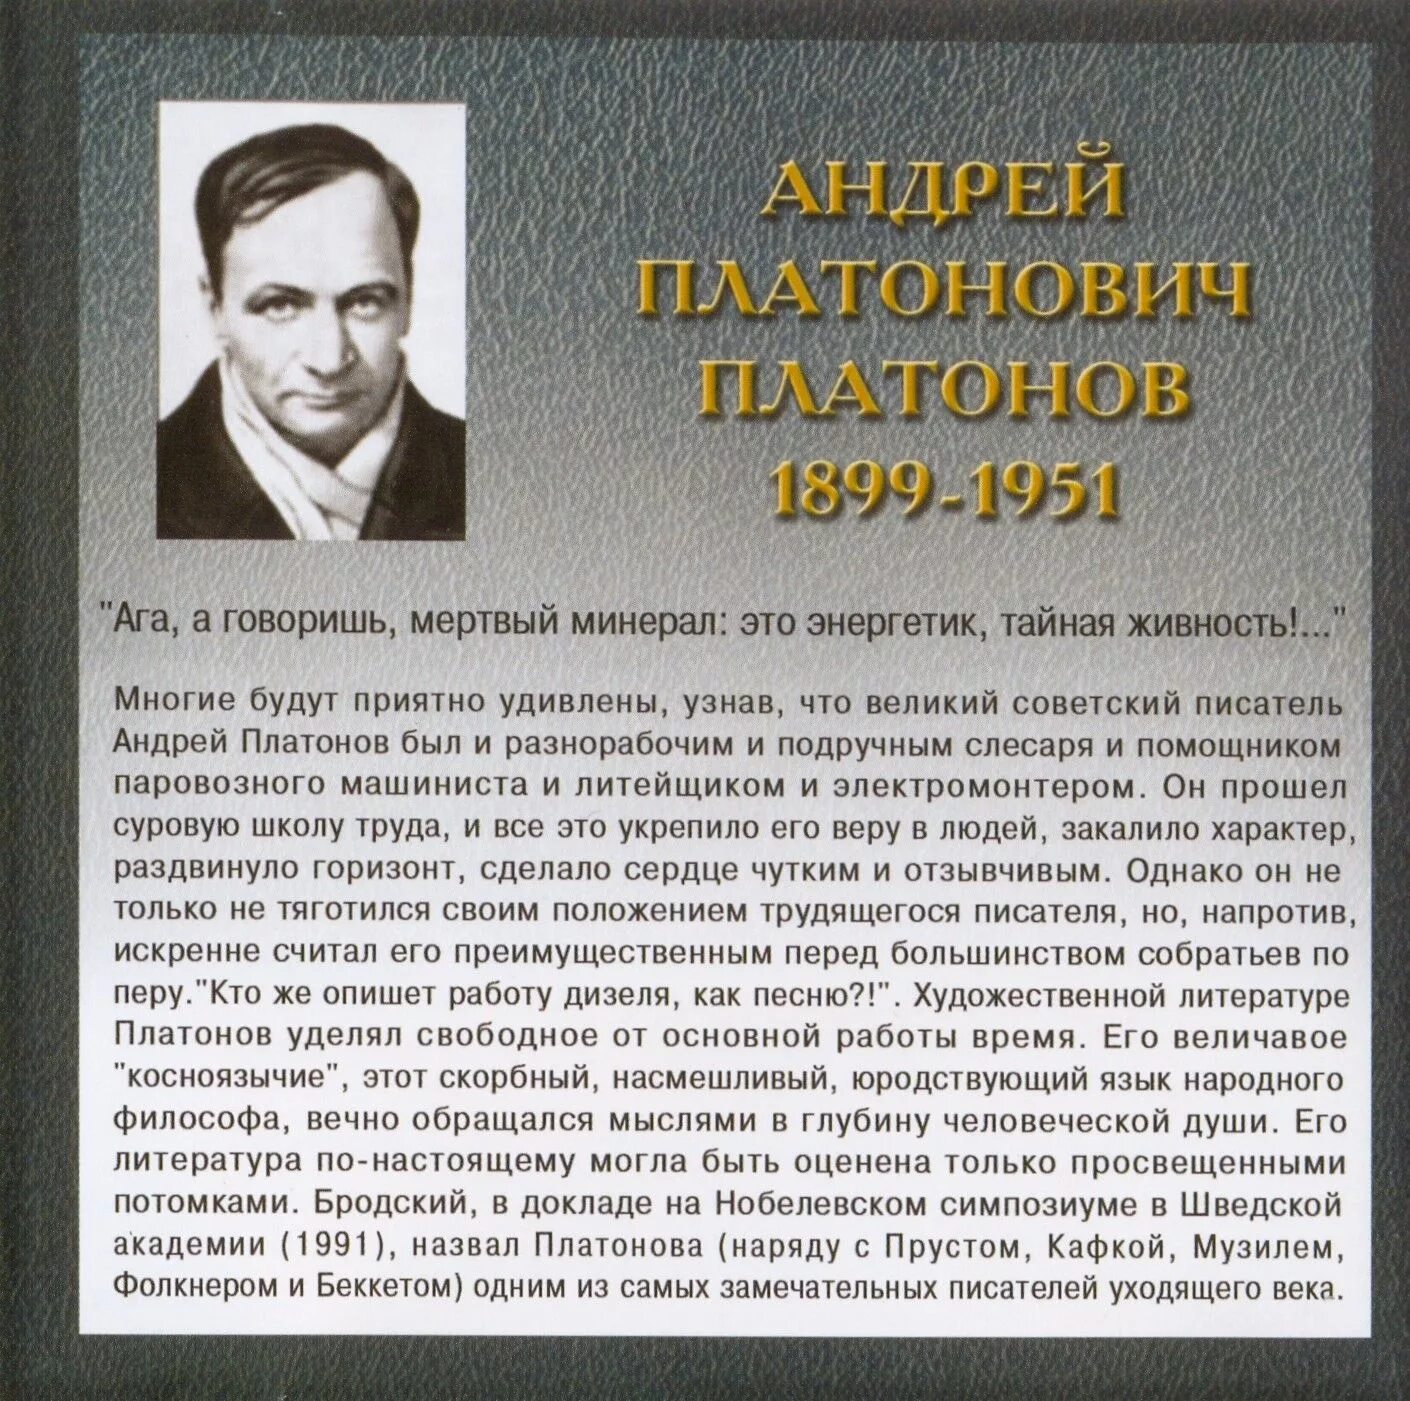 Биография Андрея Платоновича Платонова 1899-1951.